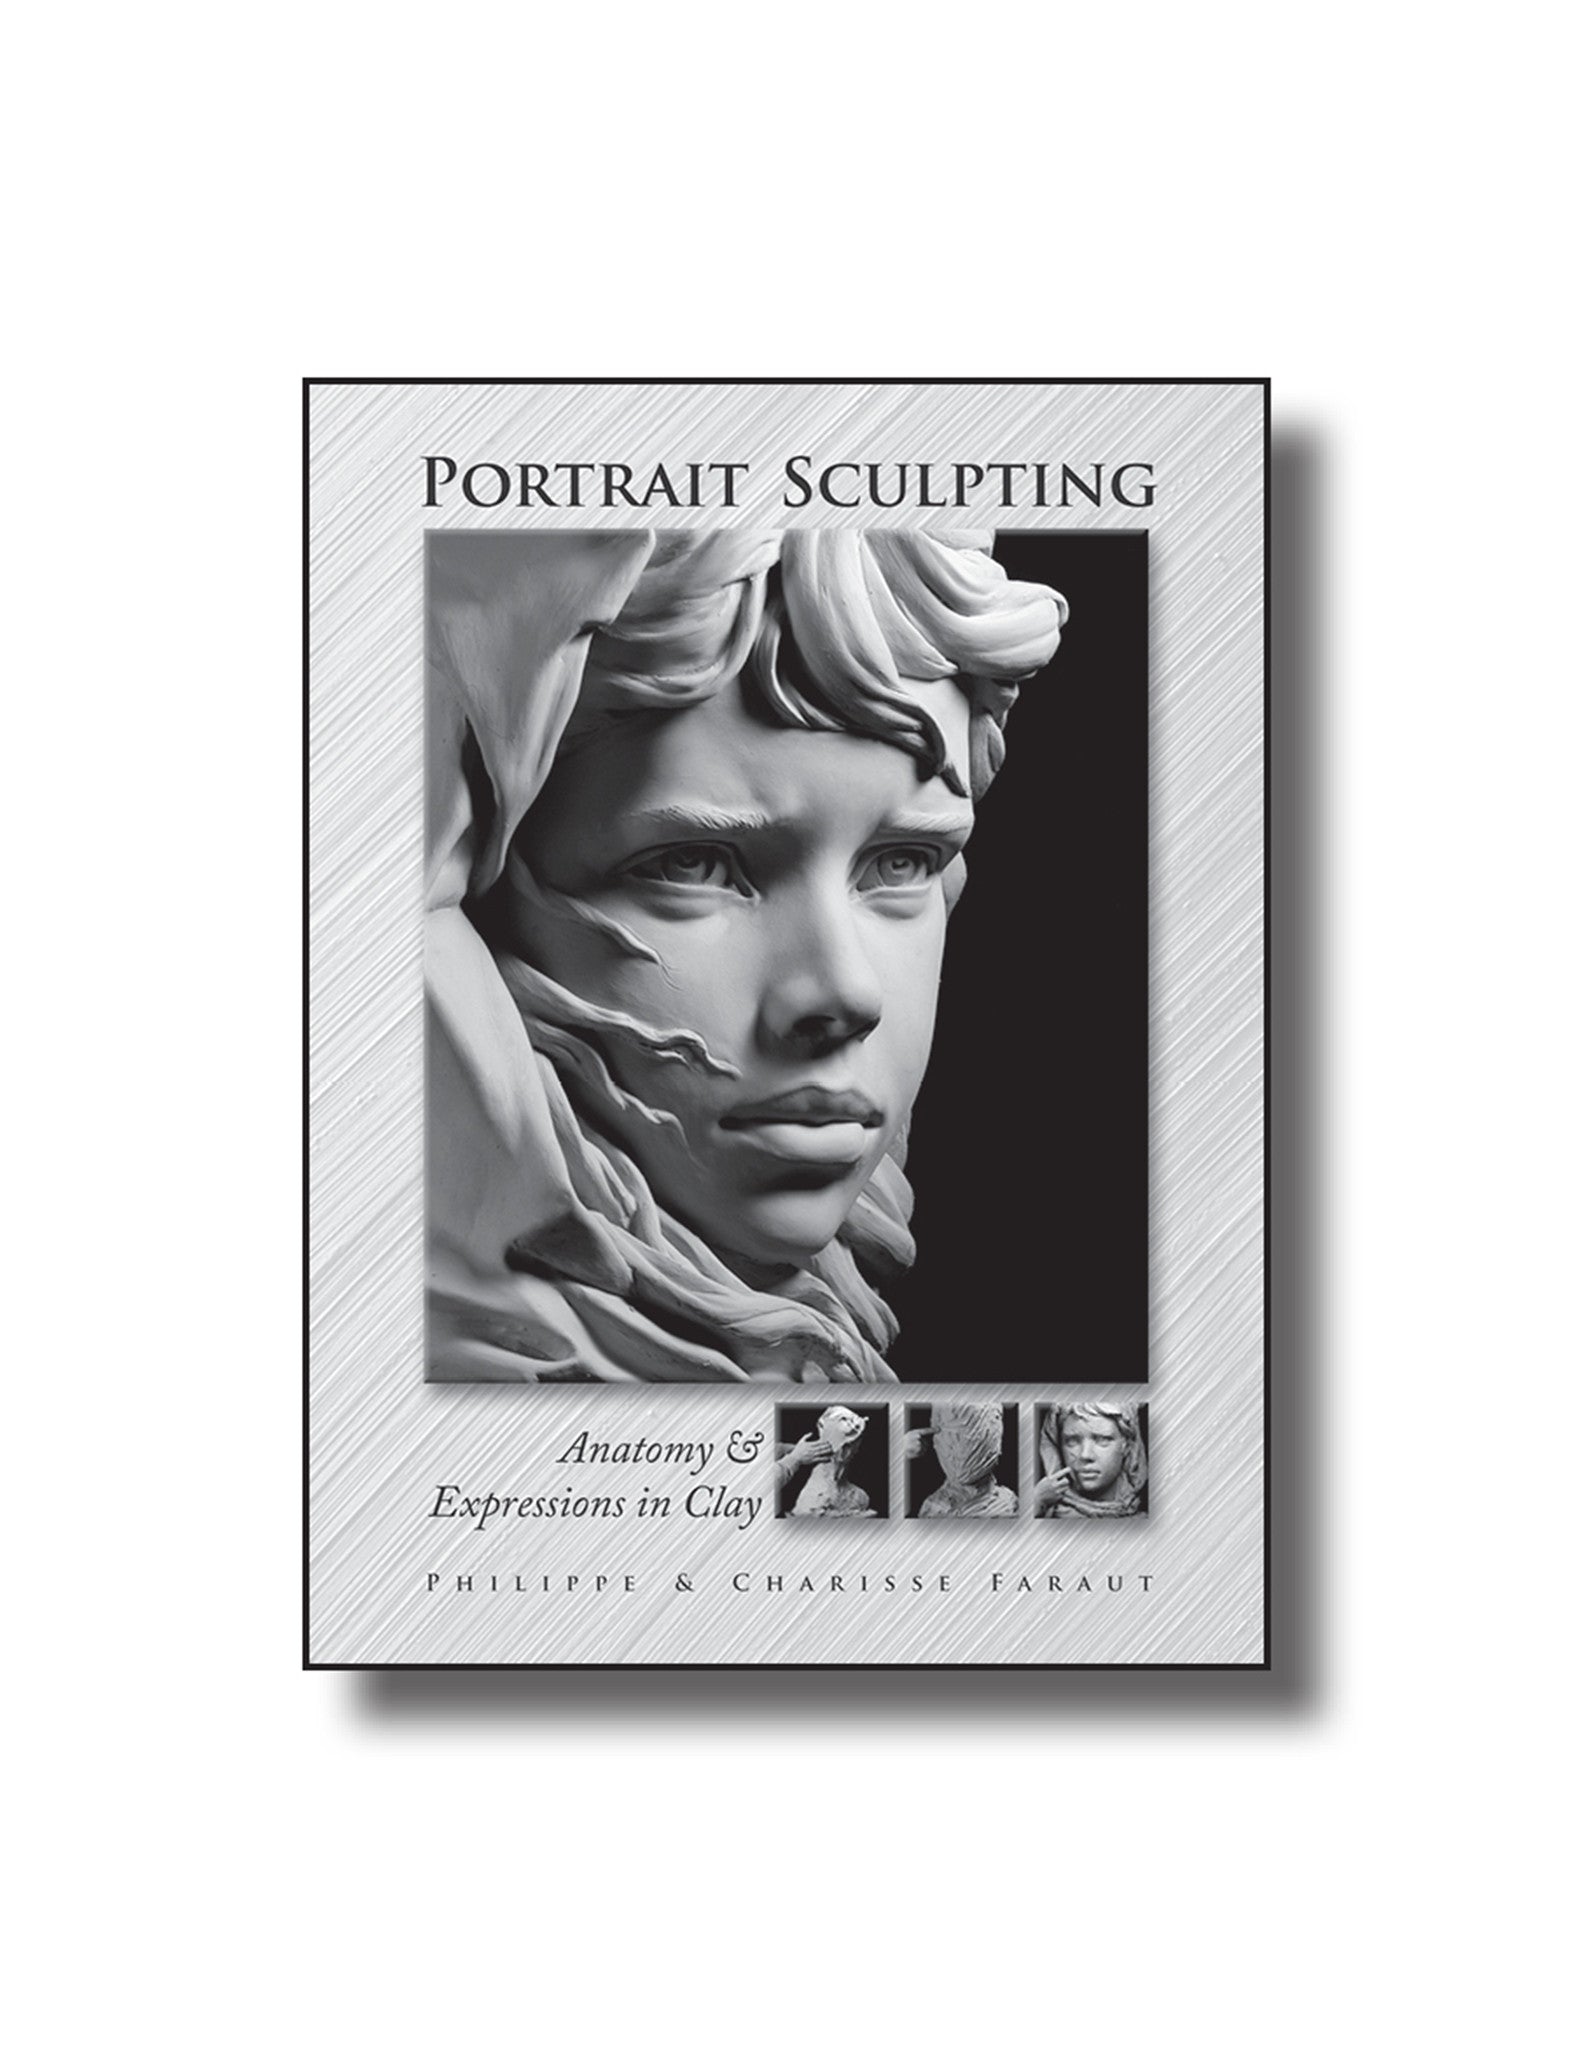 Portrait sculpting book by Philippe Faraut